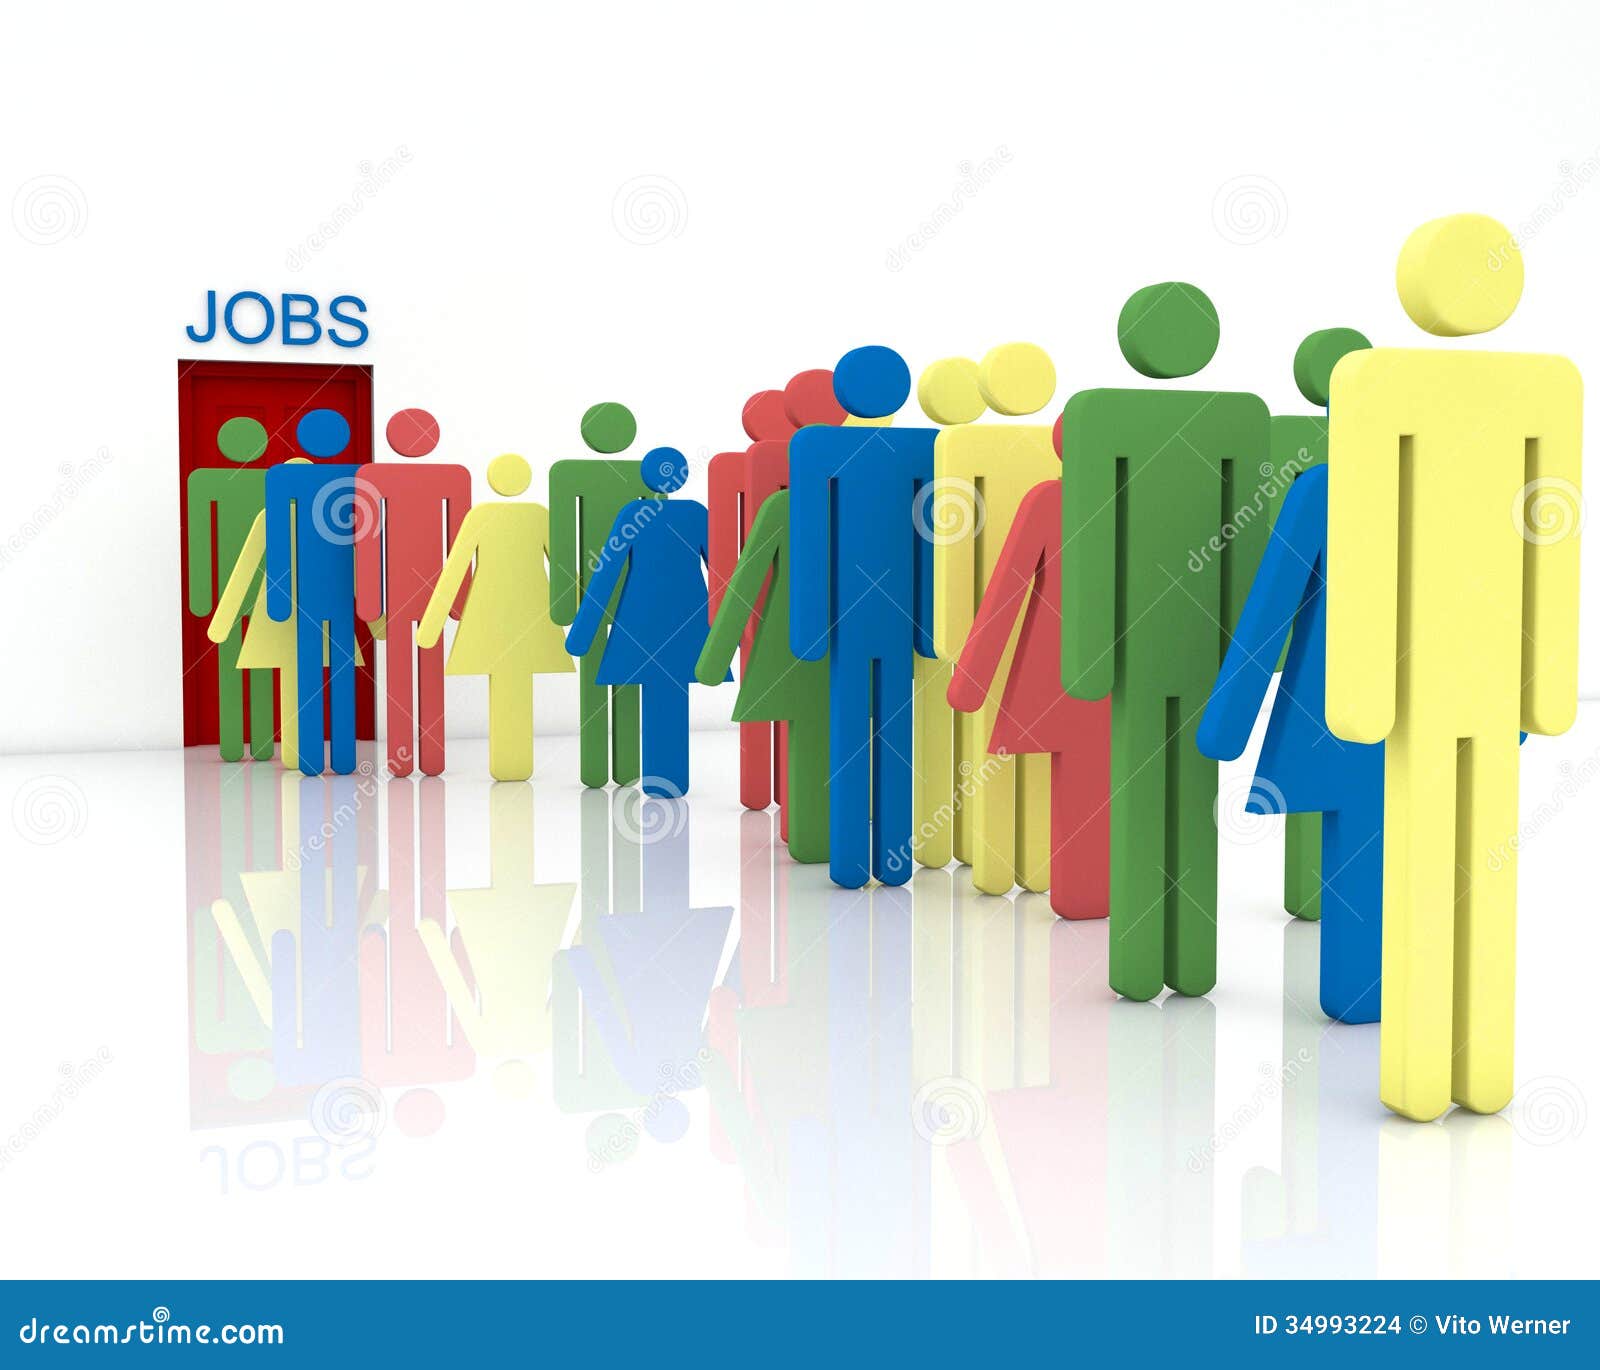 Unemployment Stock Images - Image: 34993224